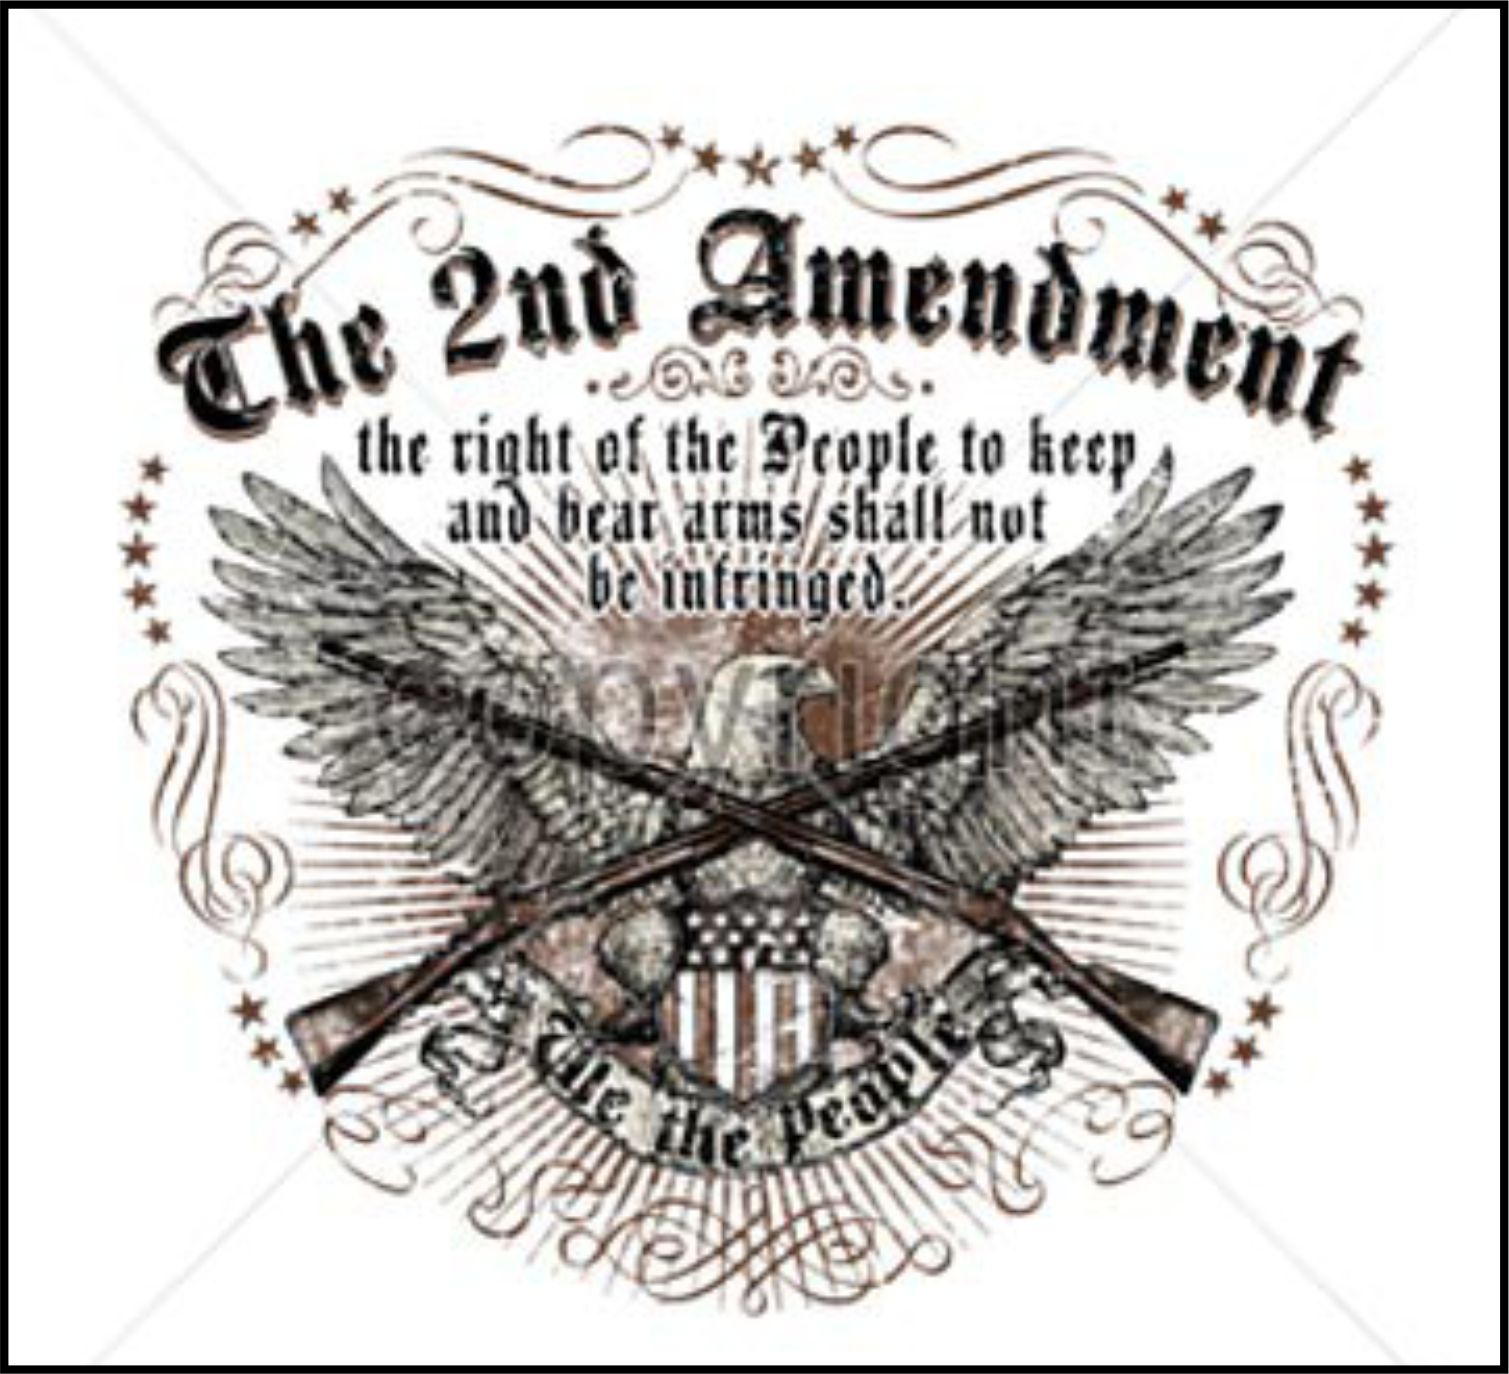 2nd Amendment wallpaper by trublu4evr  Download on ZEDGE  2ec7